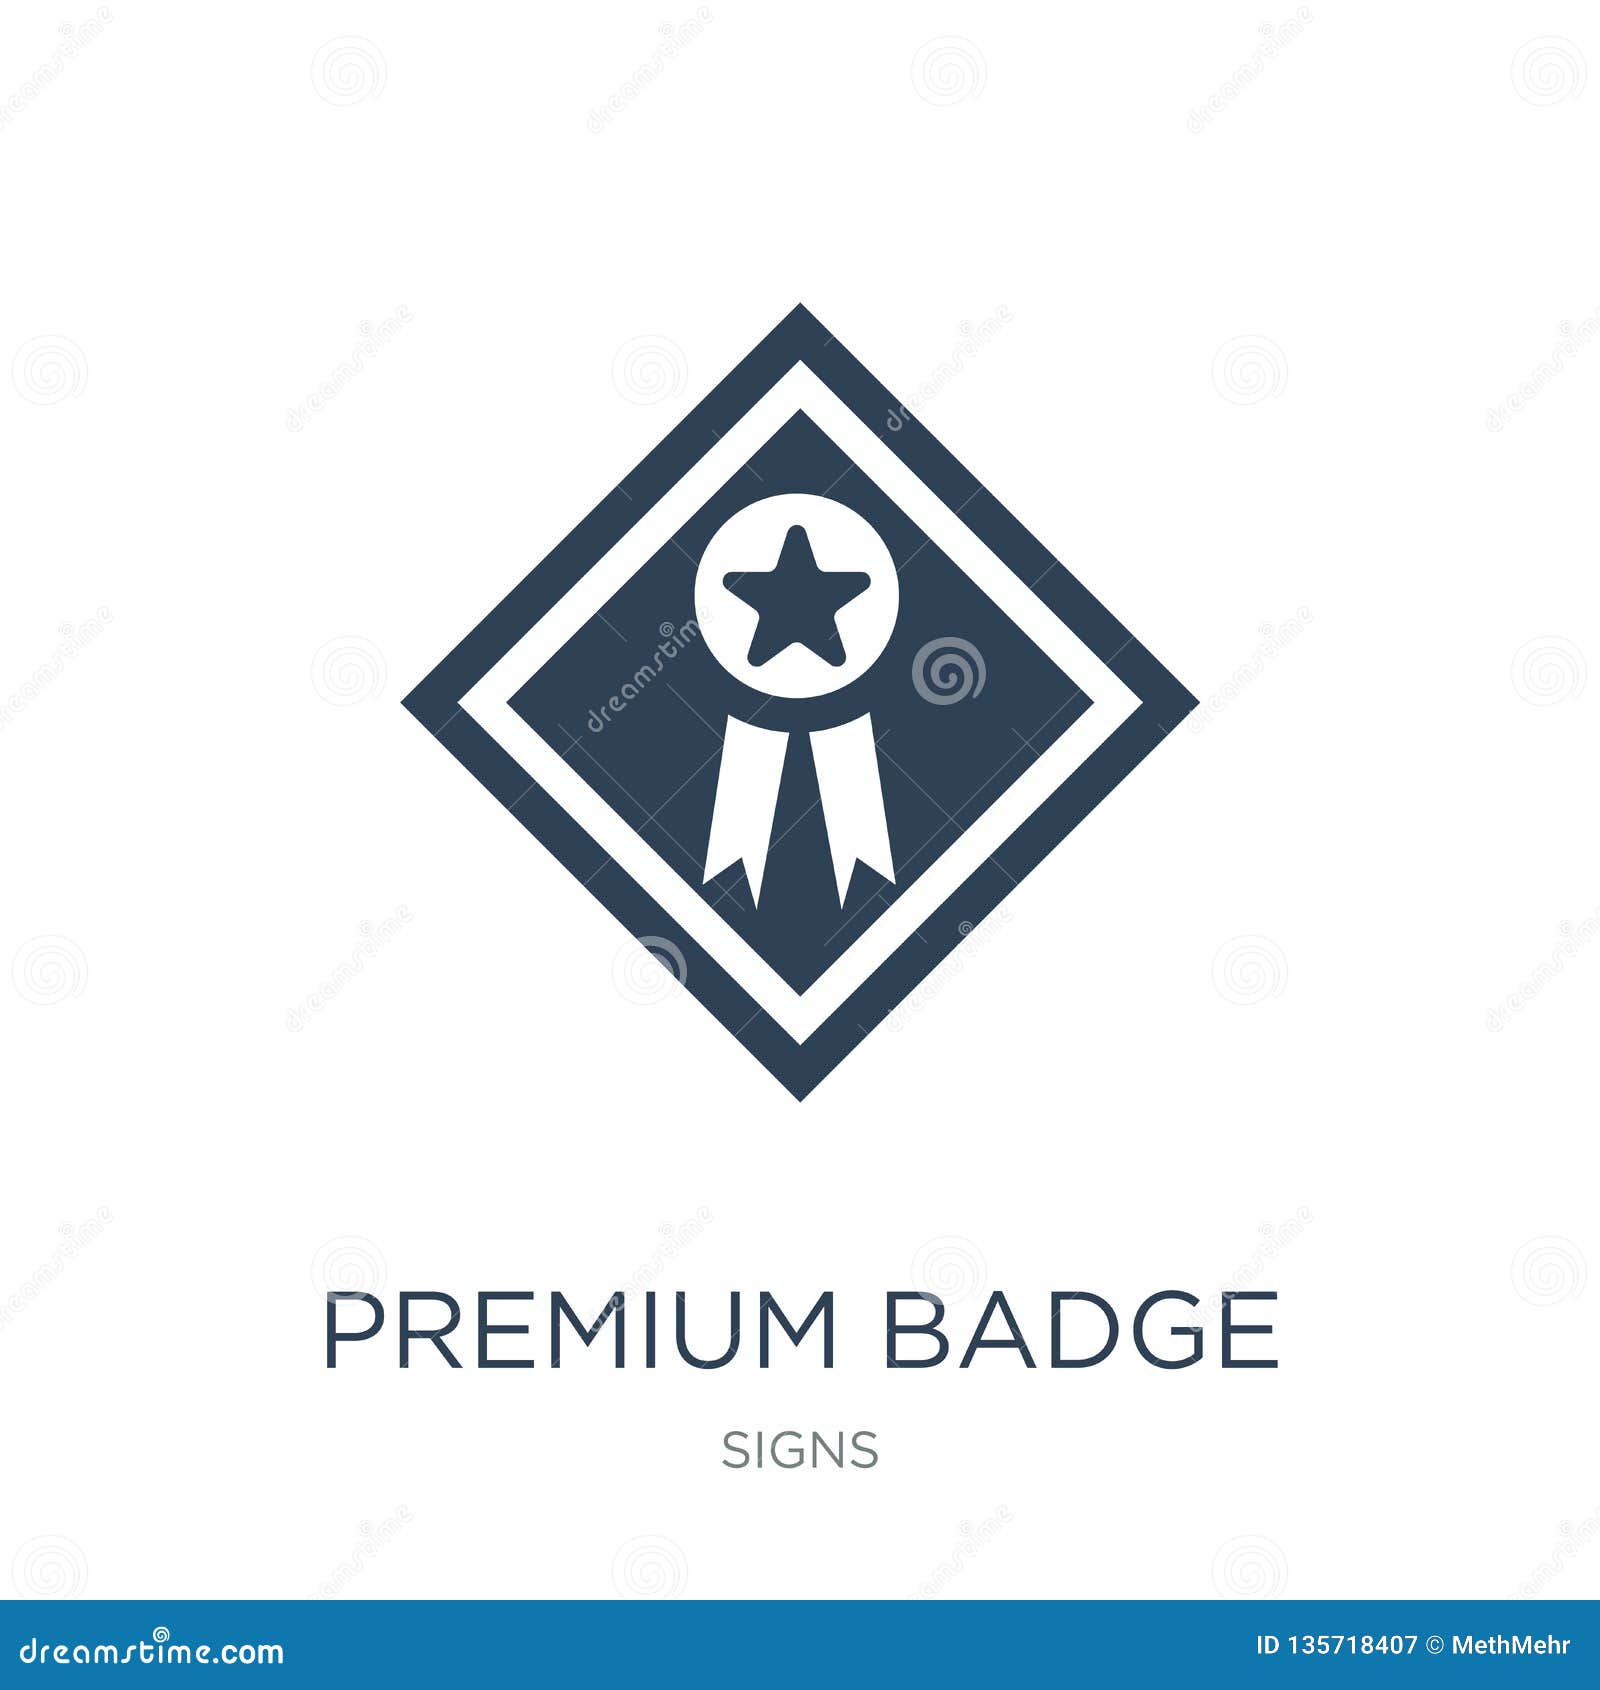 Premium Badge Icon In Trendy Design Style Premium Badge Icon Isolated On White Background Premium Badge Vector Icon Simple And Stock Vector Illustration Of Special Symbol 135718407